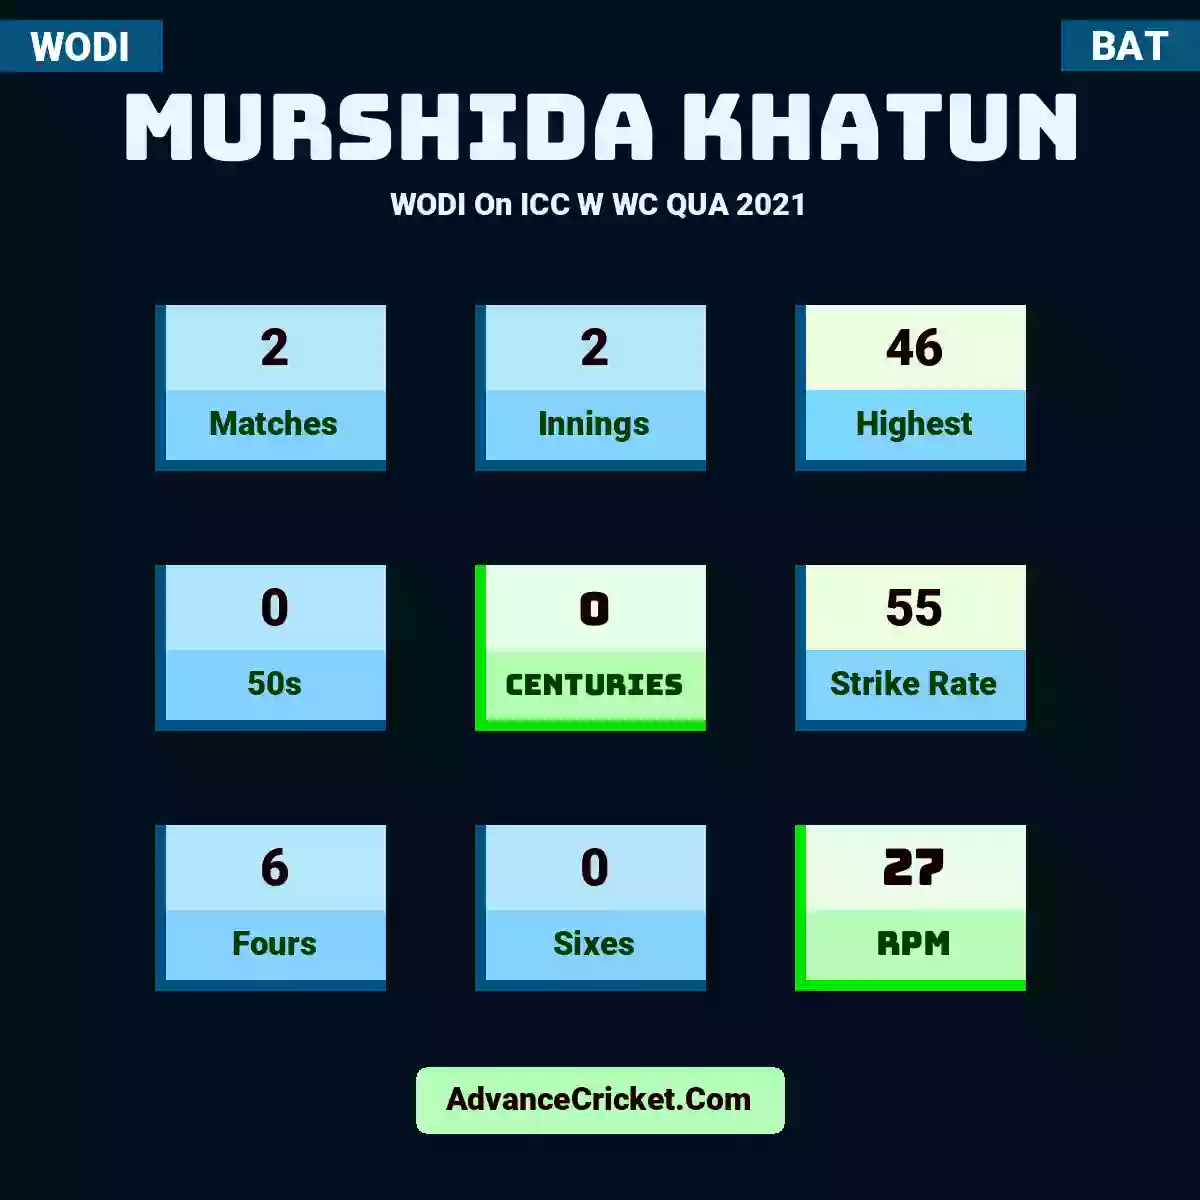 Murshida Khatun WODI  On ICC W WC QUA 2021, Murshida Khatun played 2 matches, scored 46 runs as highest, 0 half-centuries, and 0 centuries, with a strike rate of 55. M.Khatun hit 6 fours and 0 sixes, with an RPM of 27.